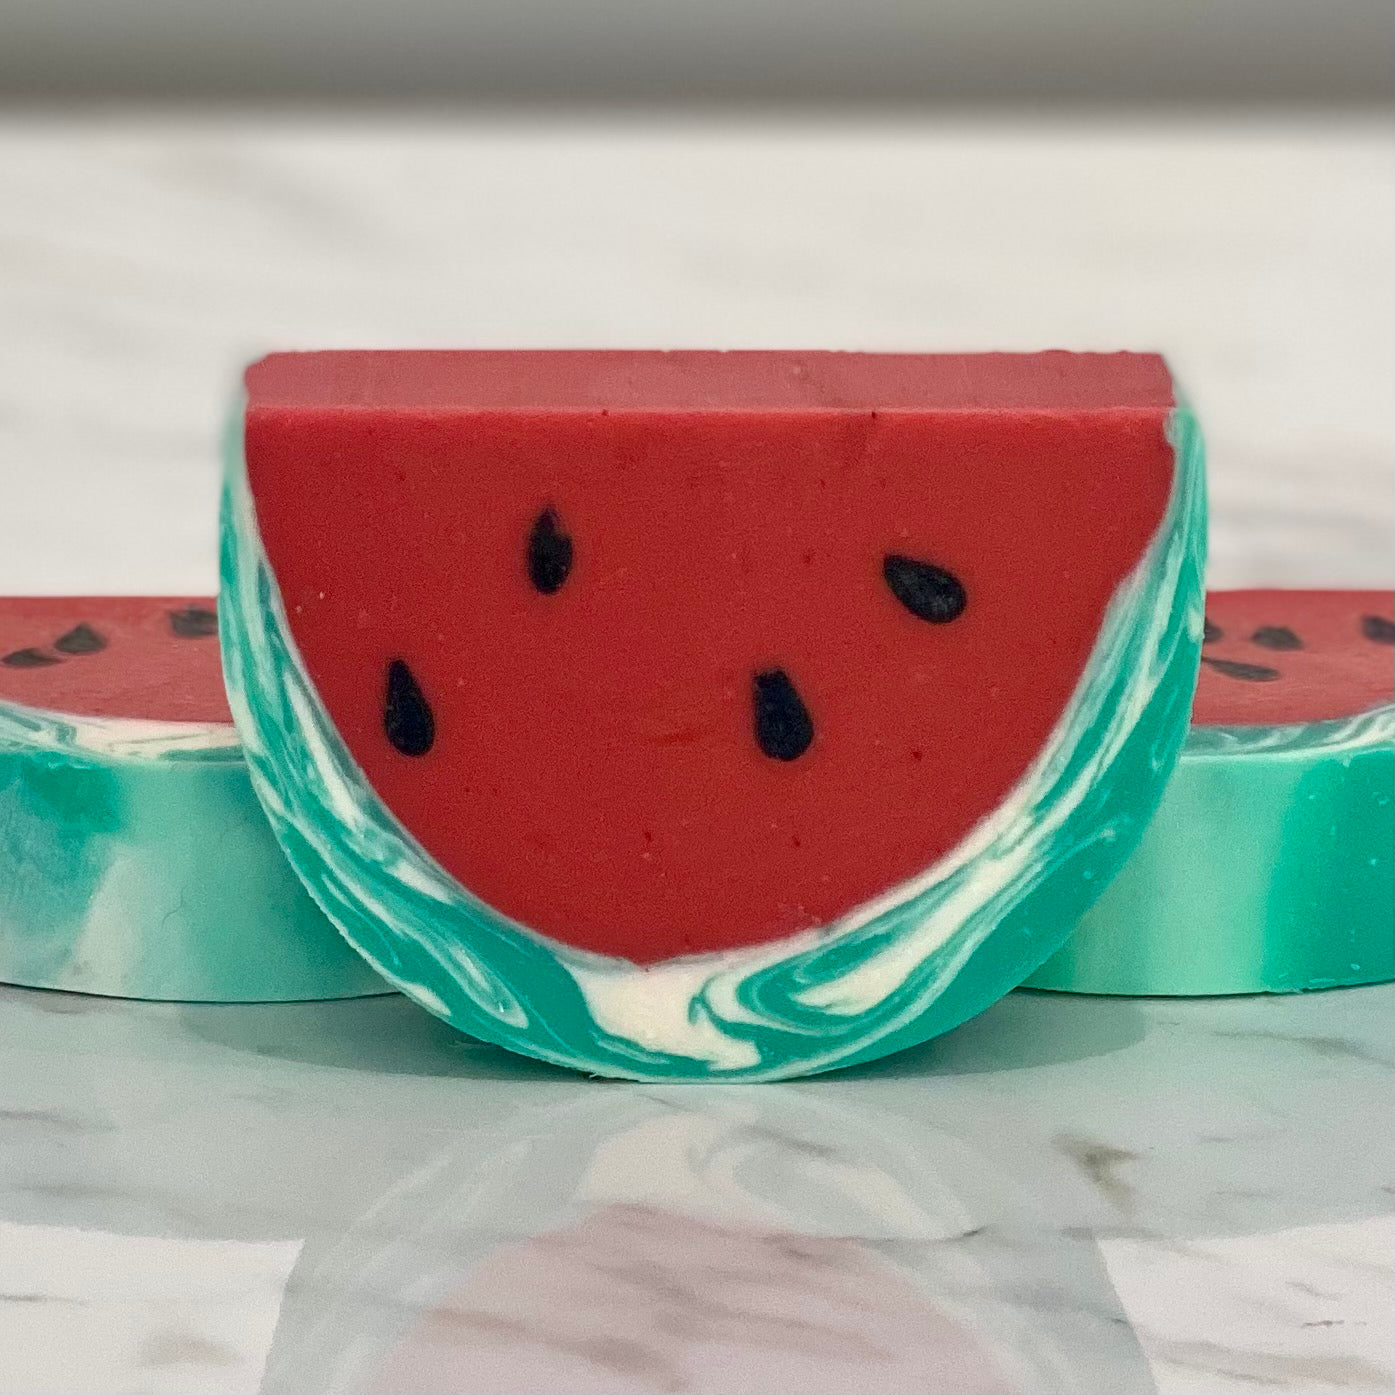 Watermelon Shaped Soap